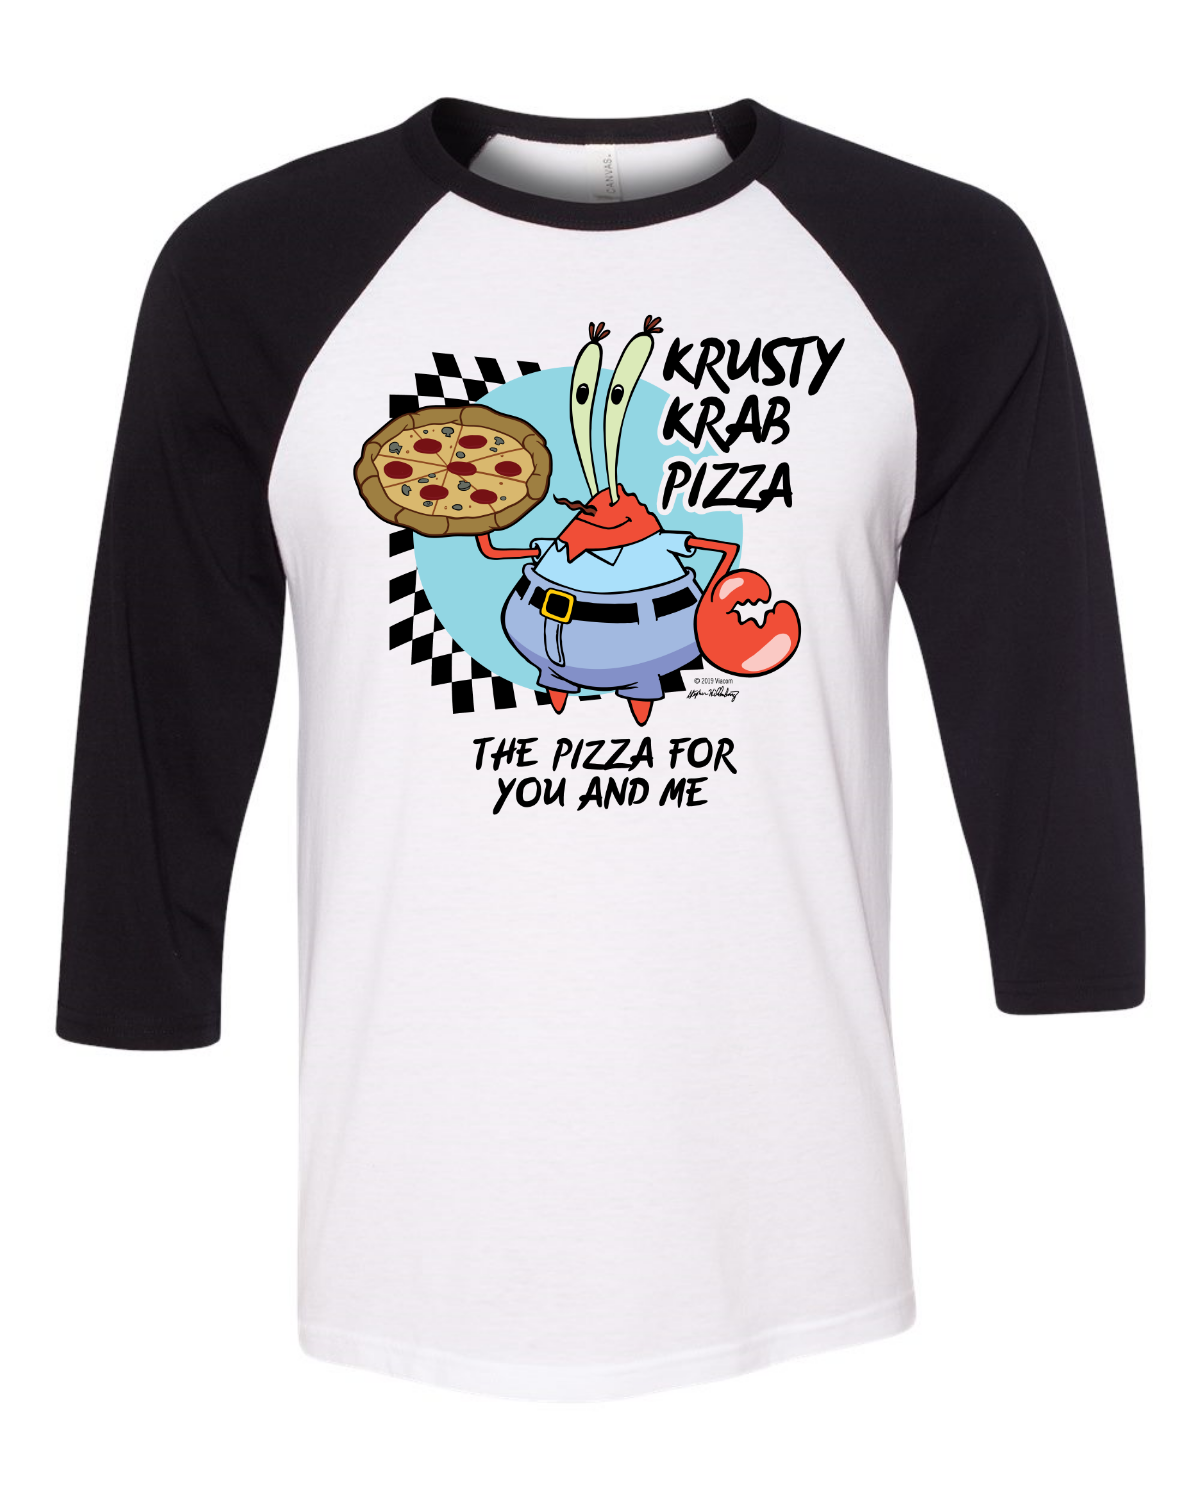 SpongeBob SquarePants The Krusty Krab Pizza Raglan Sleeve Baseball T-Shirt